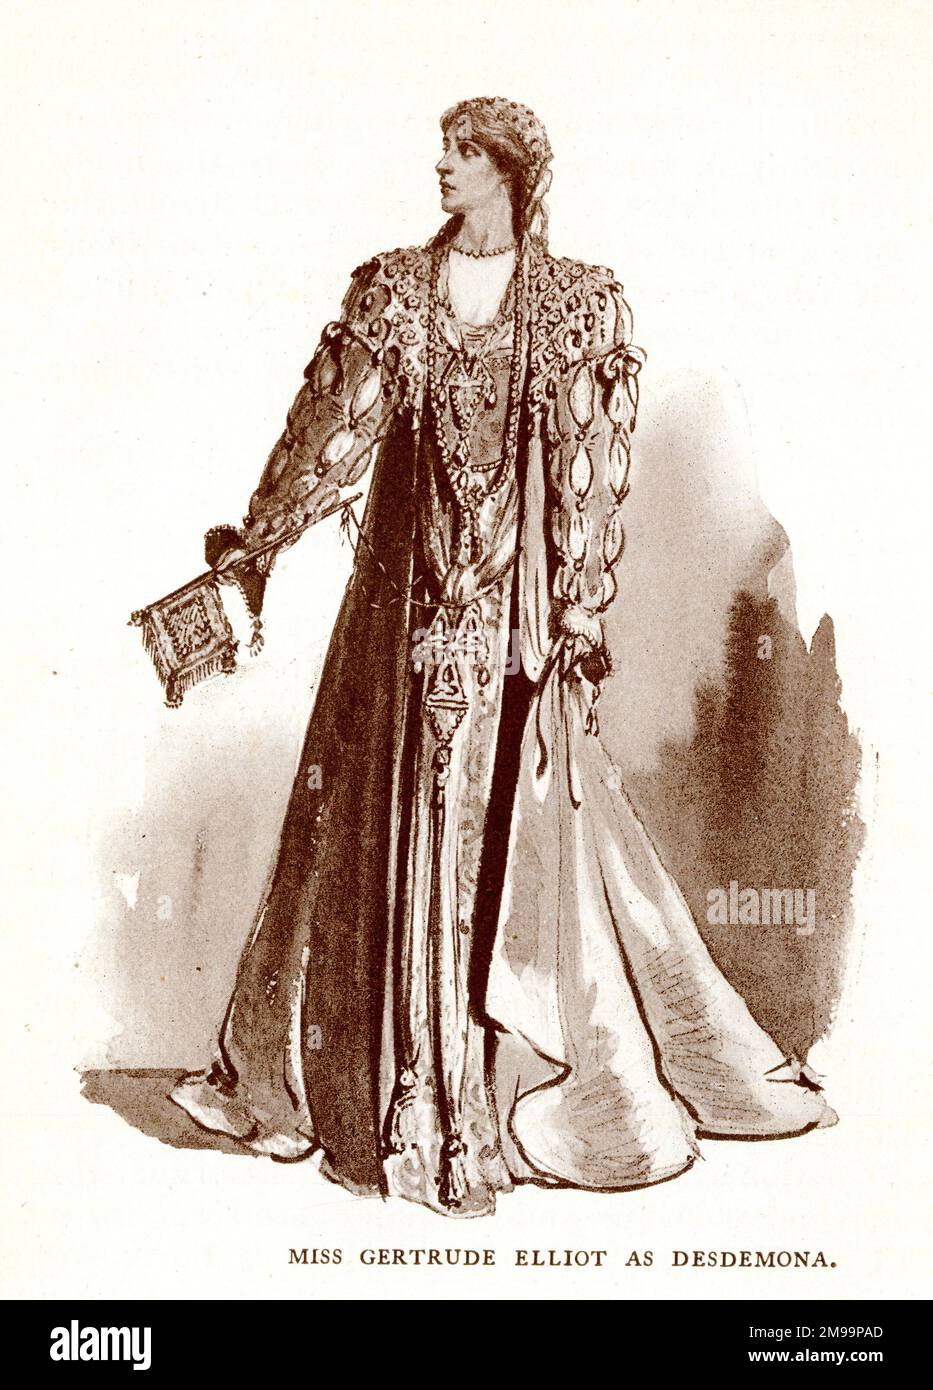 Gertrude Elliot as Desdemona in Othello. Stock Photo